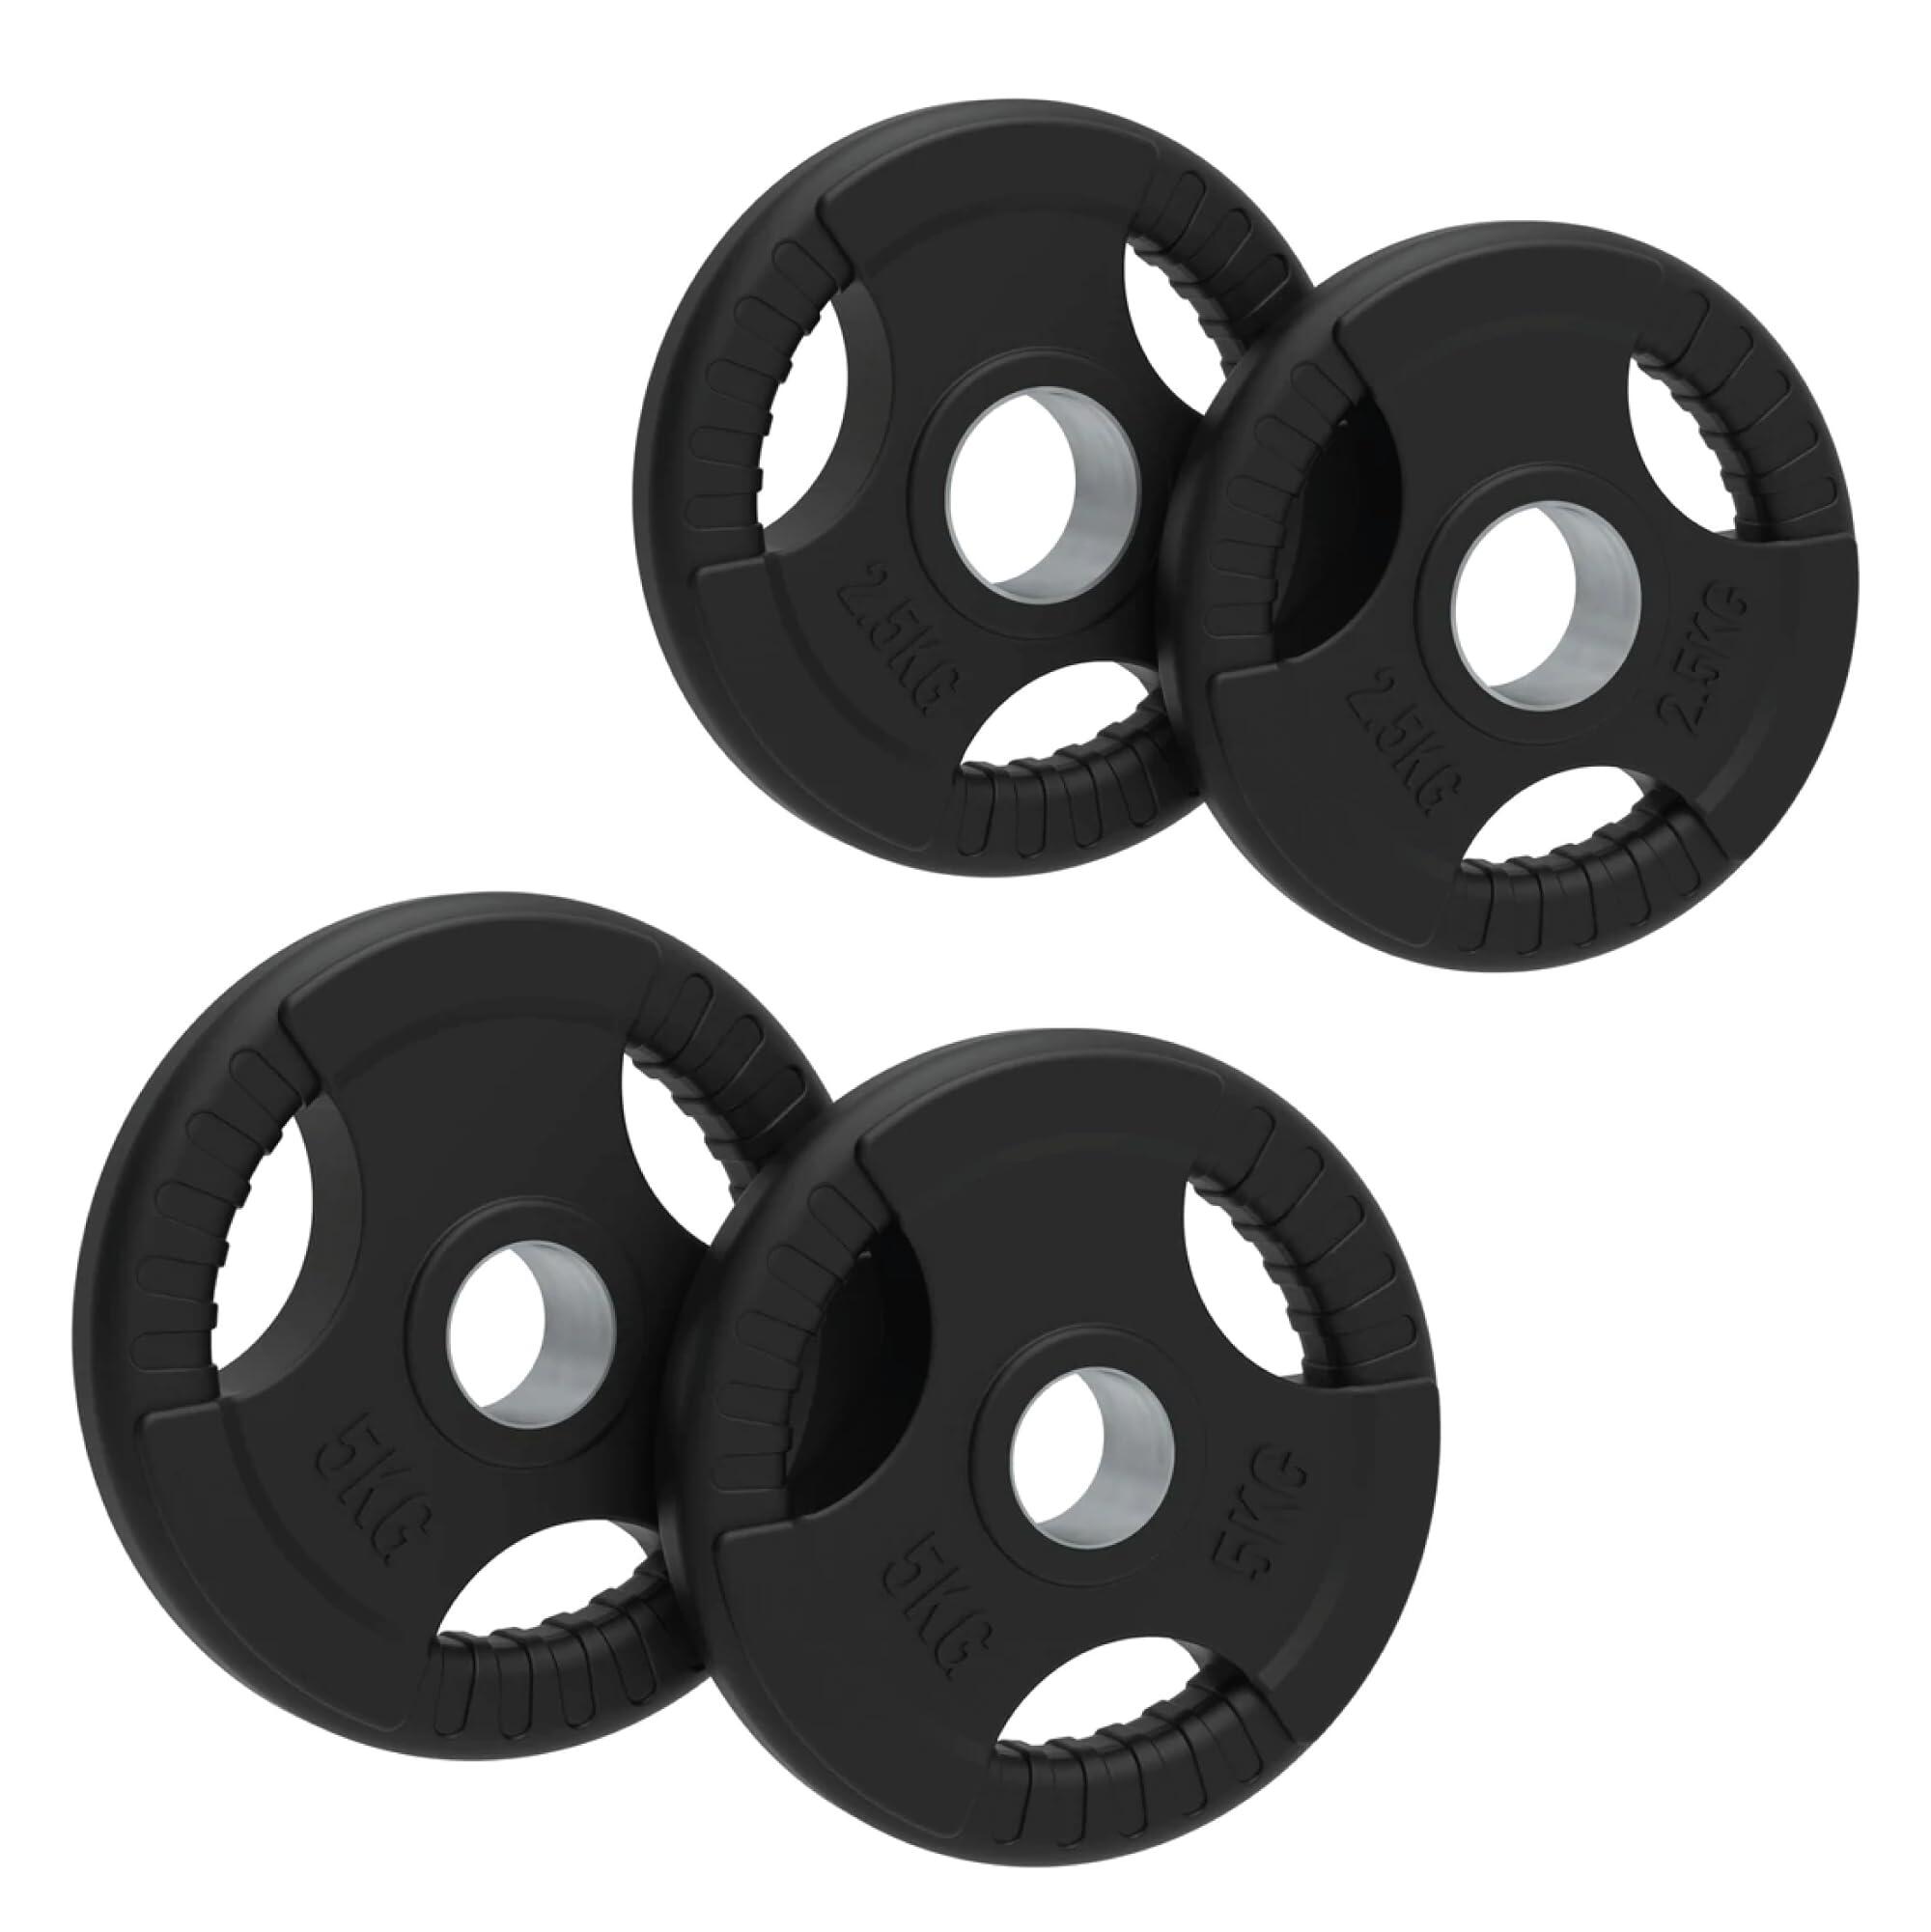 Olympic Tri-Grip Rubber Weight Plates - Black SET (2x 2.5kg + 2x 5kg) 1/6